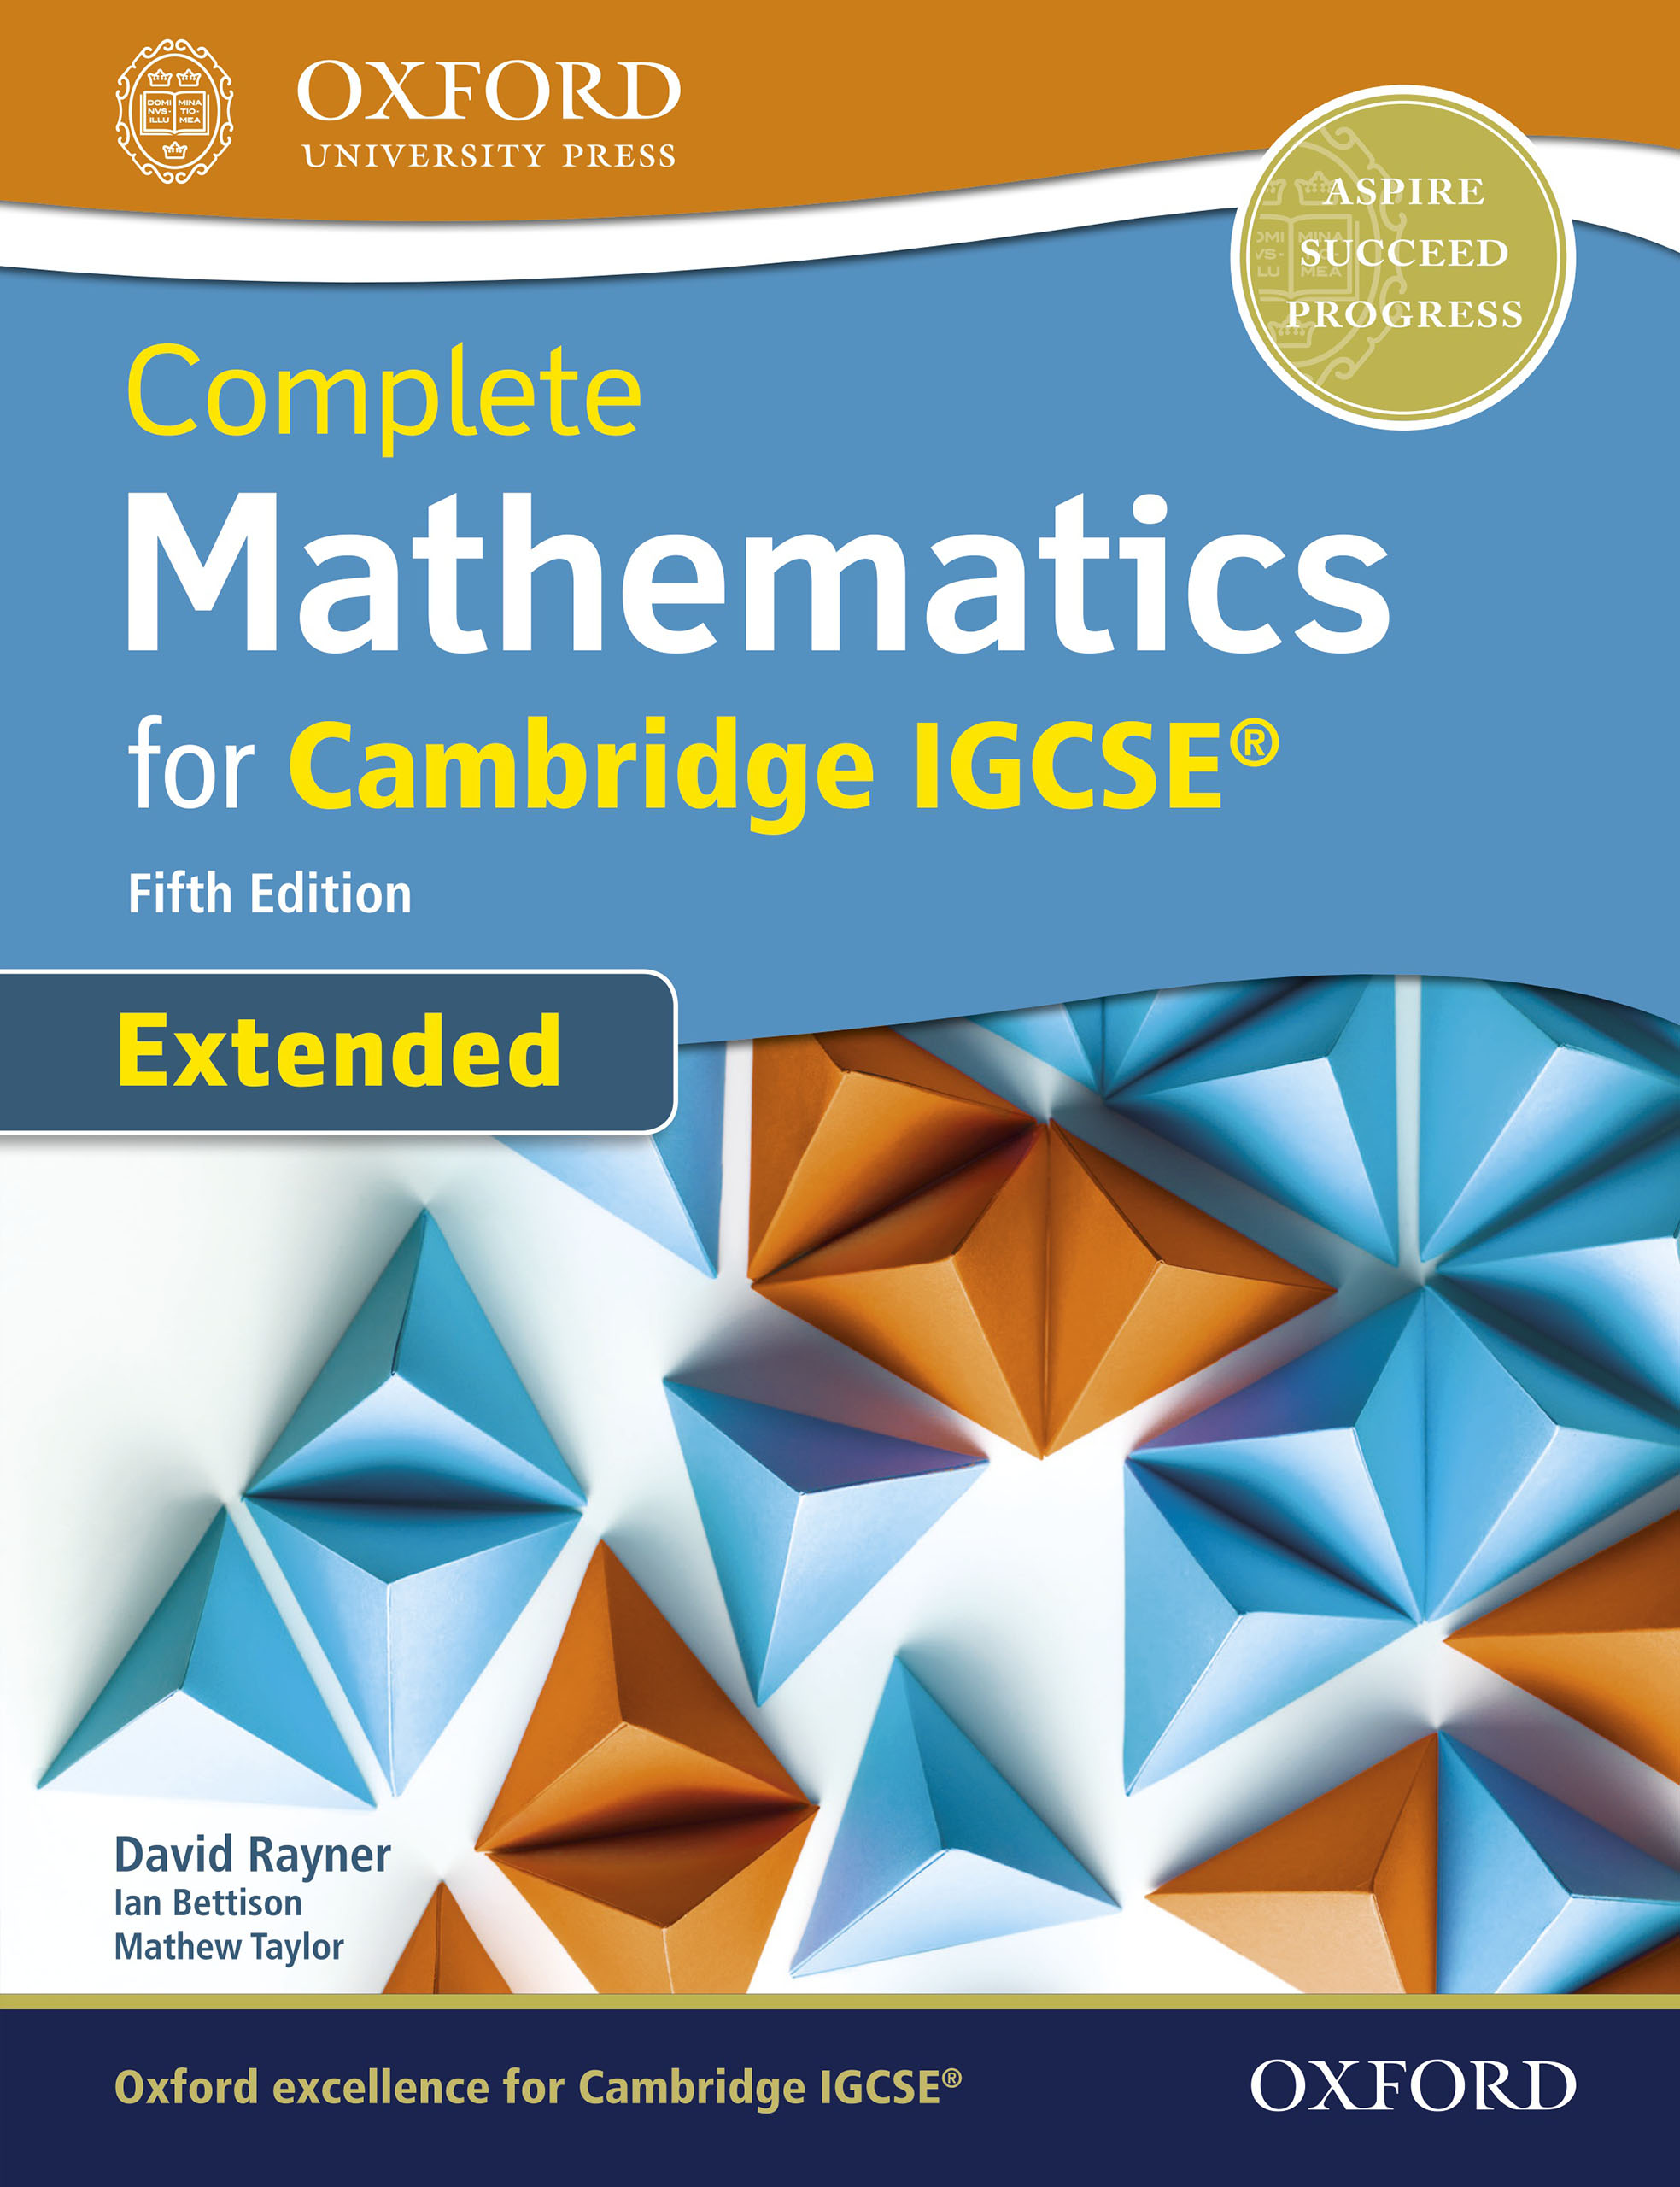 Mathematics text IGCSE Cambridge